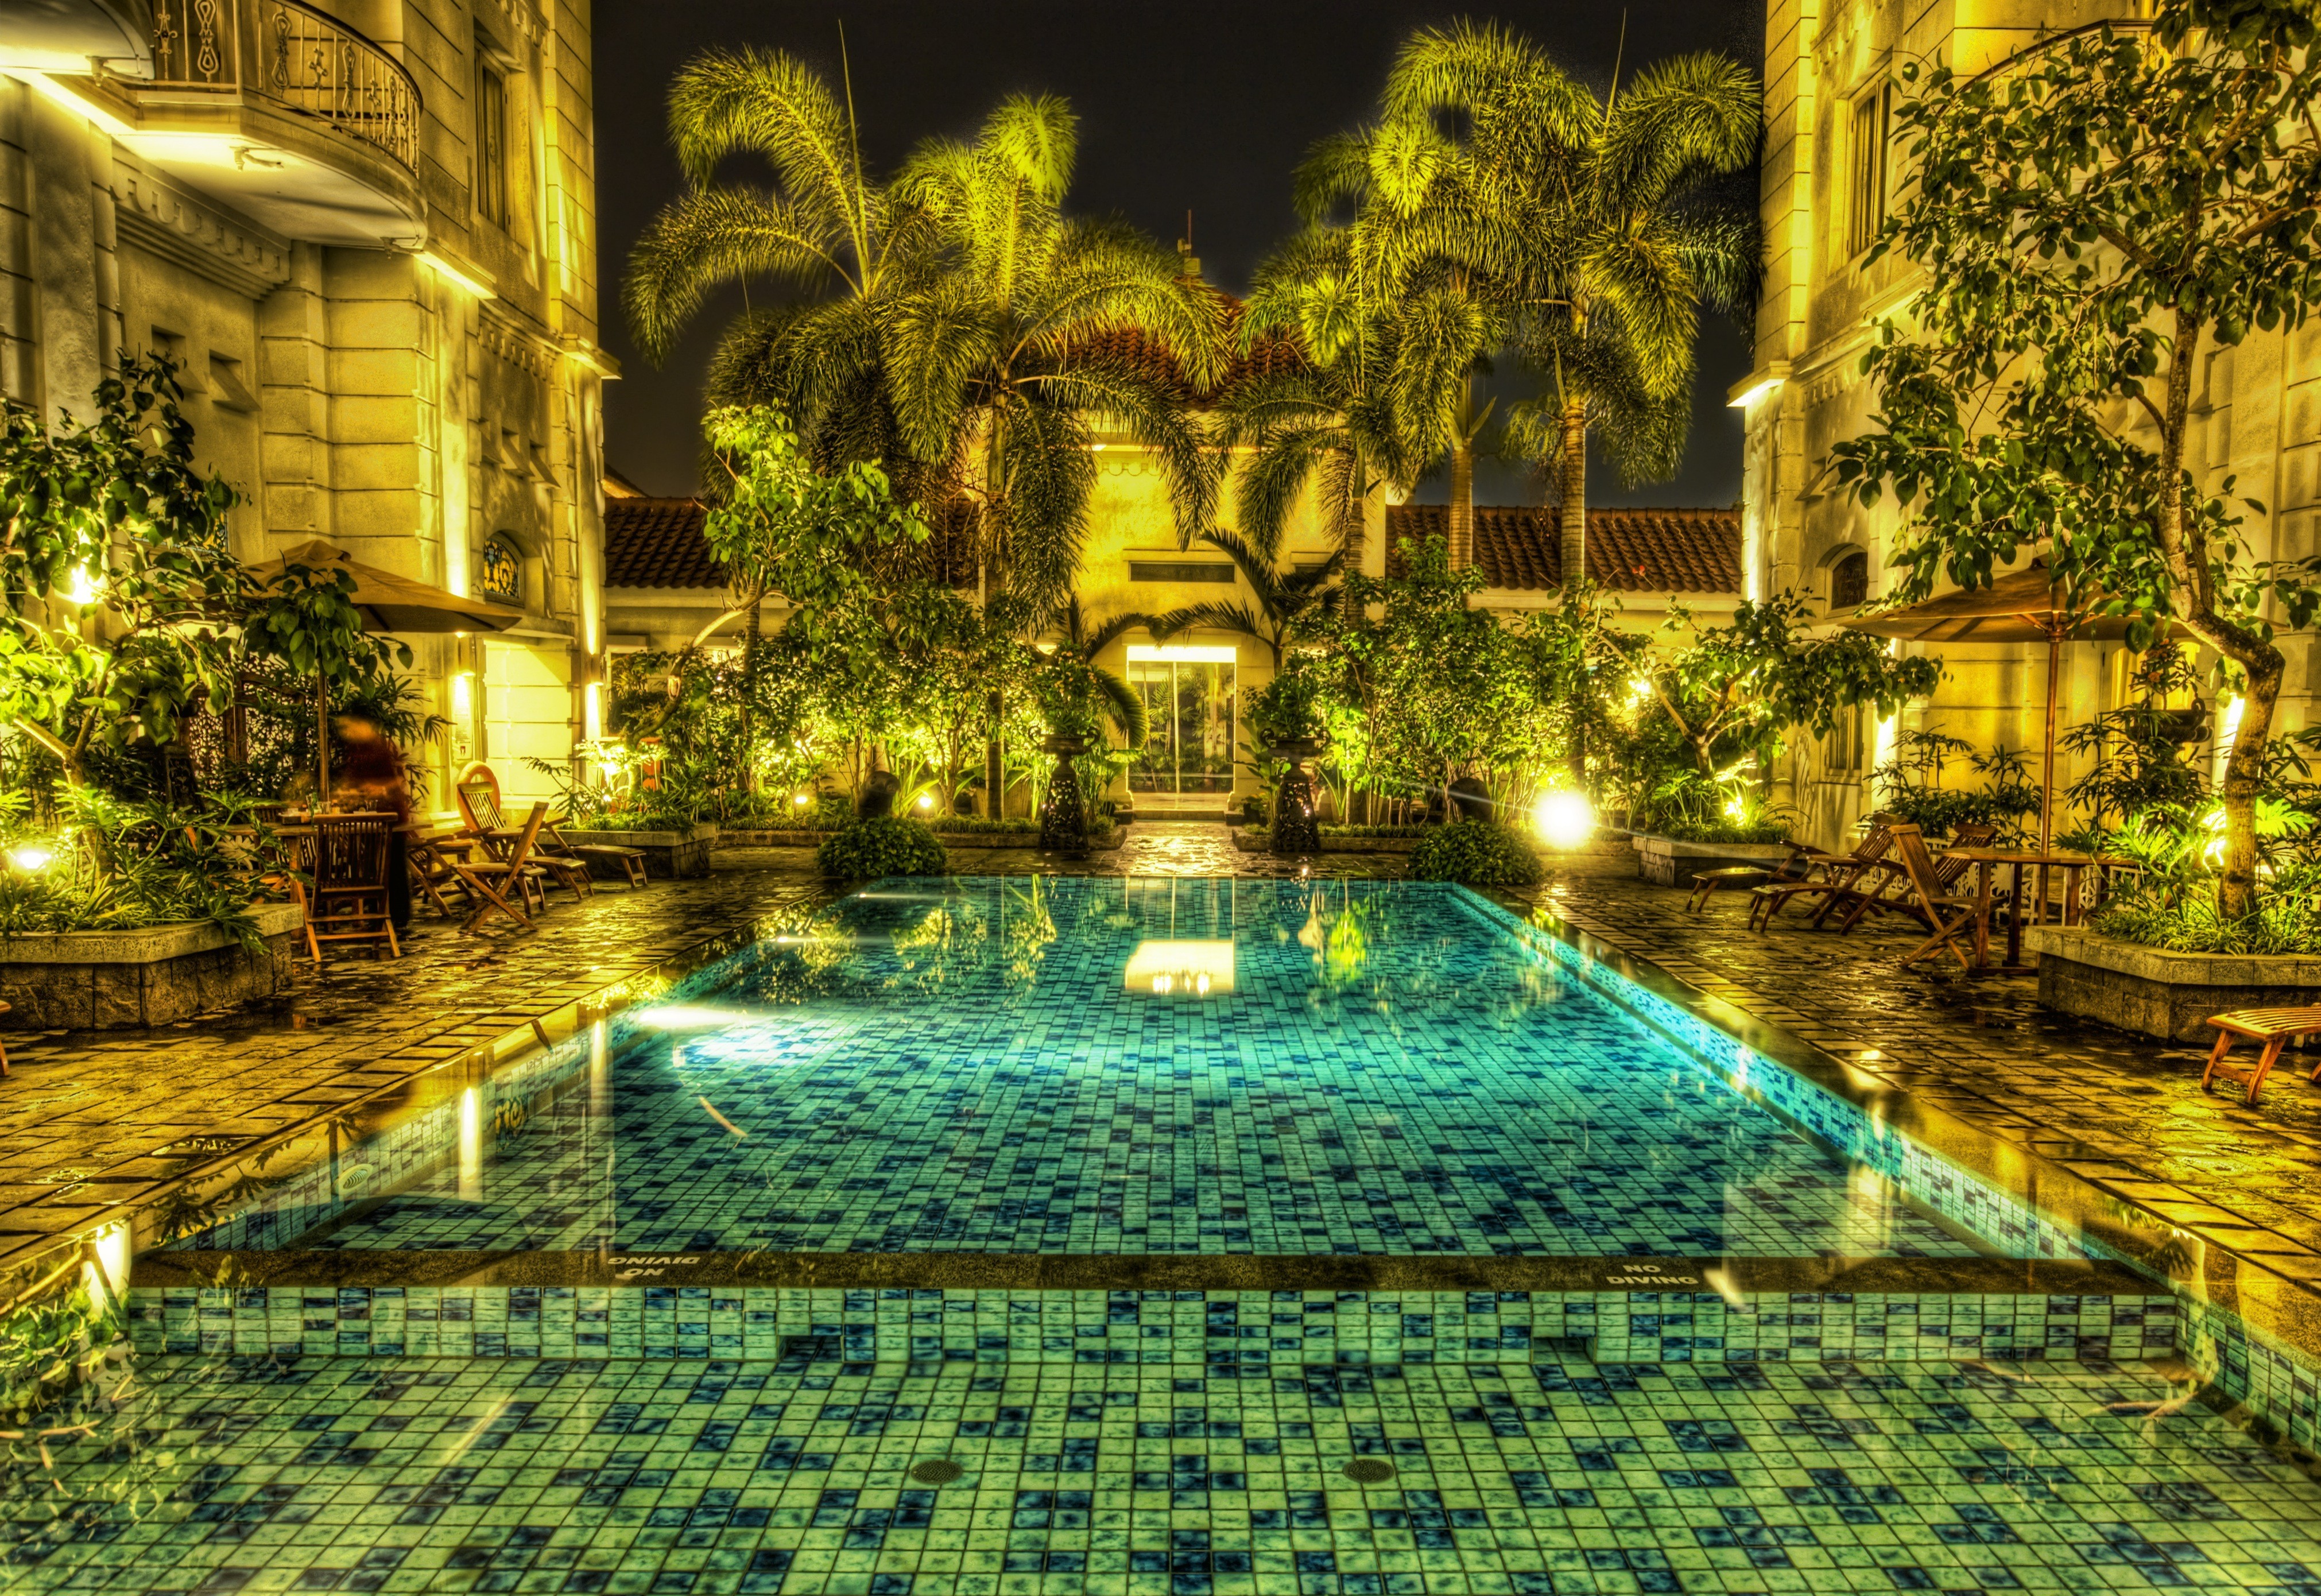 Pool Jakarta Indonesia Palm Tree Mosaic HDR 4043x2780